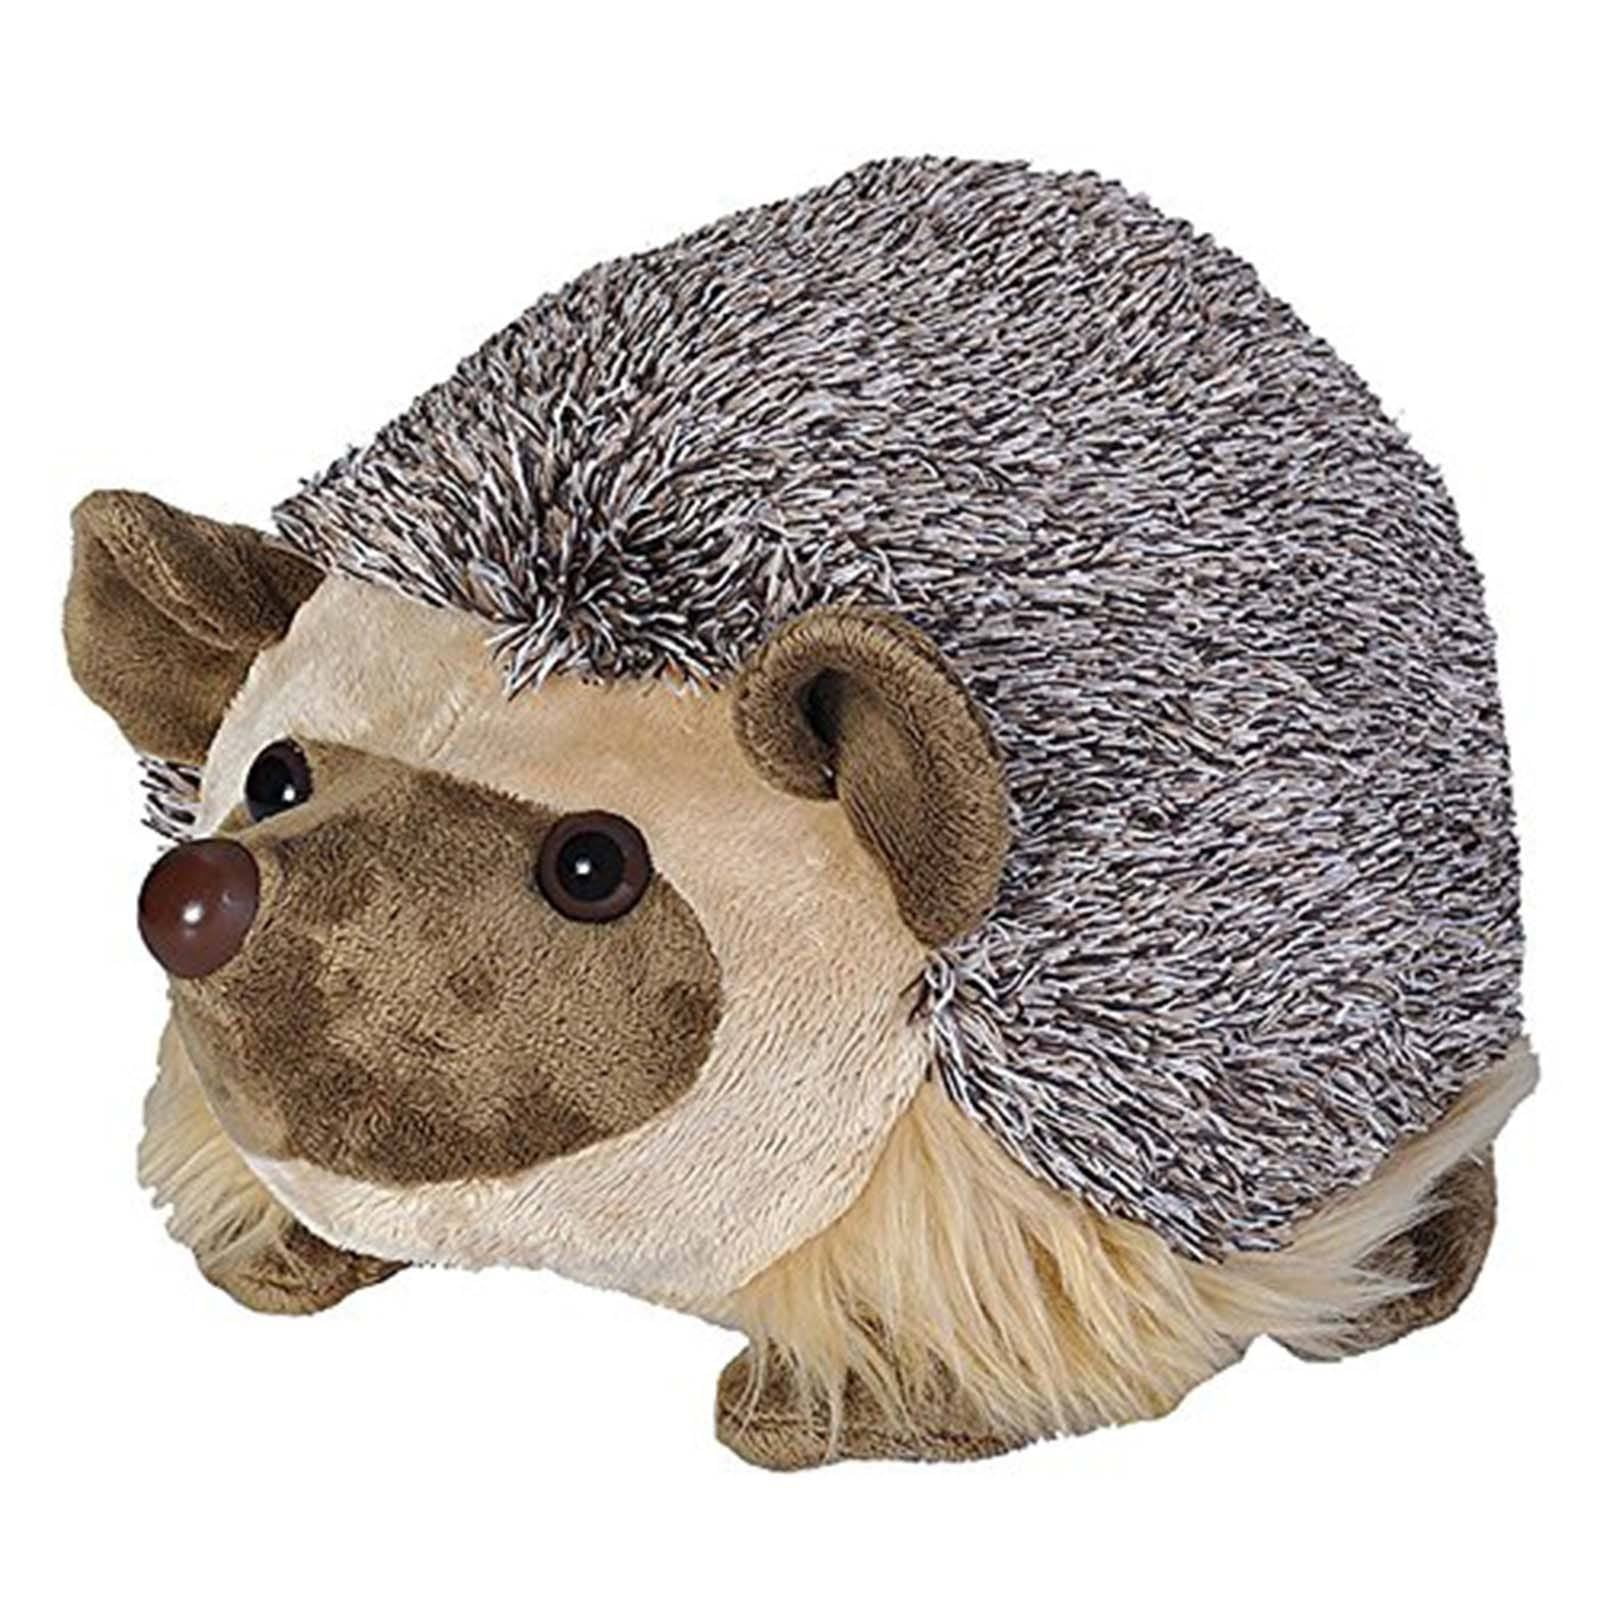 Cuddlekins Hedgehog Plush Stuffed Animal by Wild Republic, Kid Gifts, Zoo Animals, 12 ...1600 x 1600